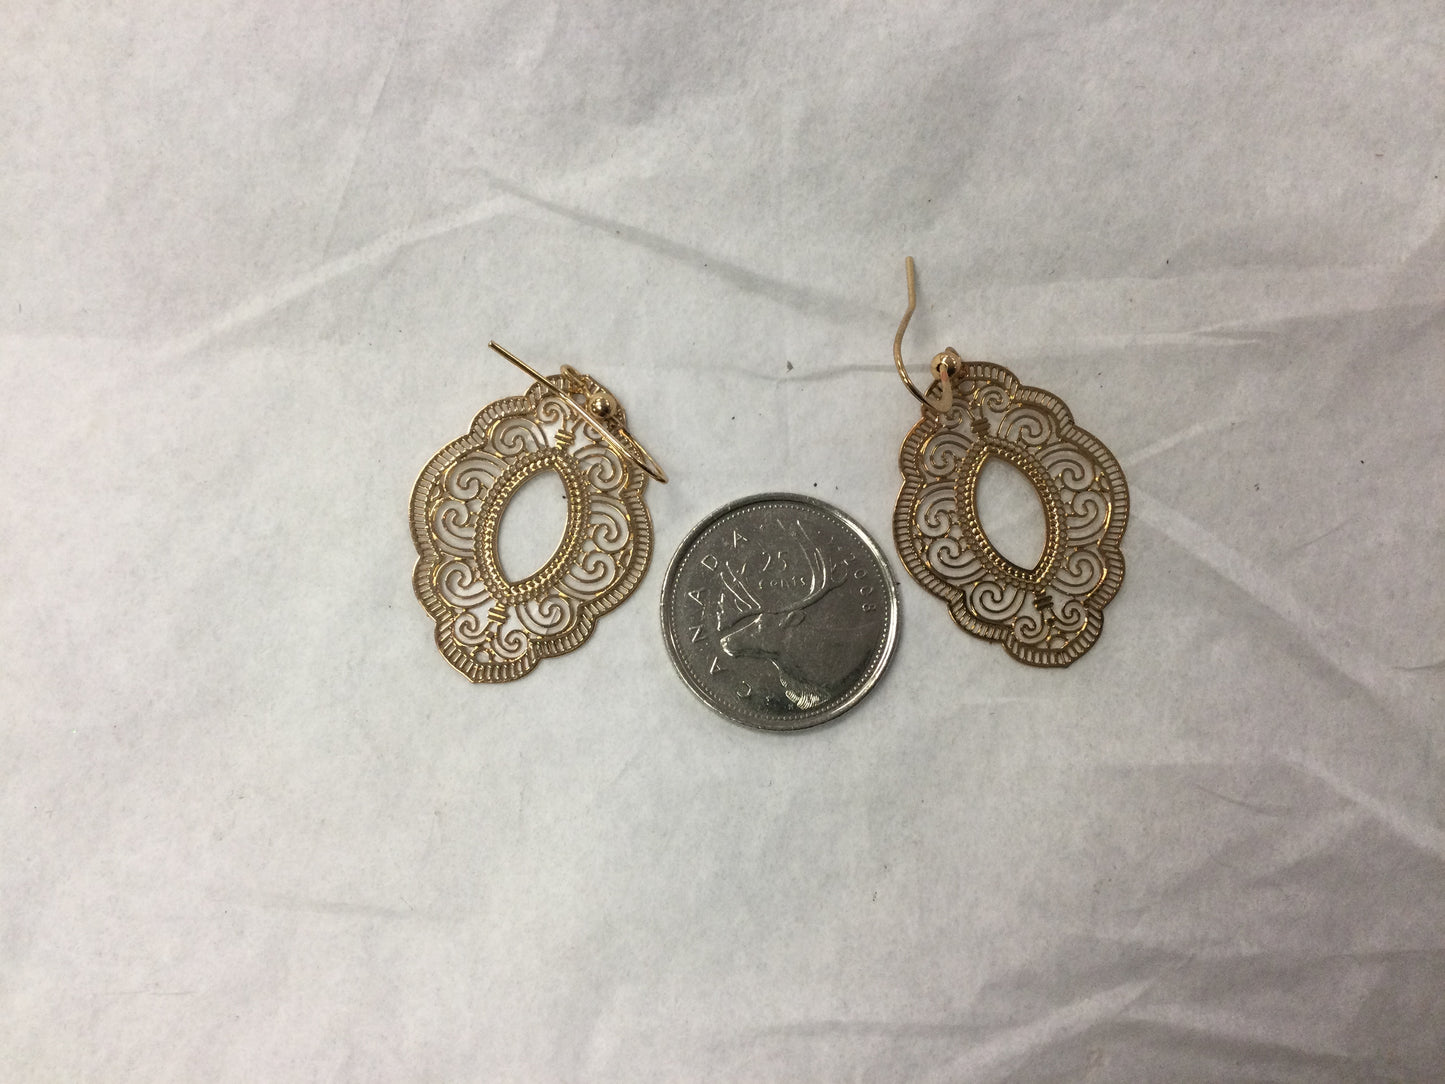 Lavishy earrings, mirror cut marquis